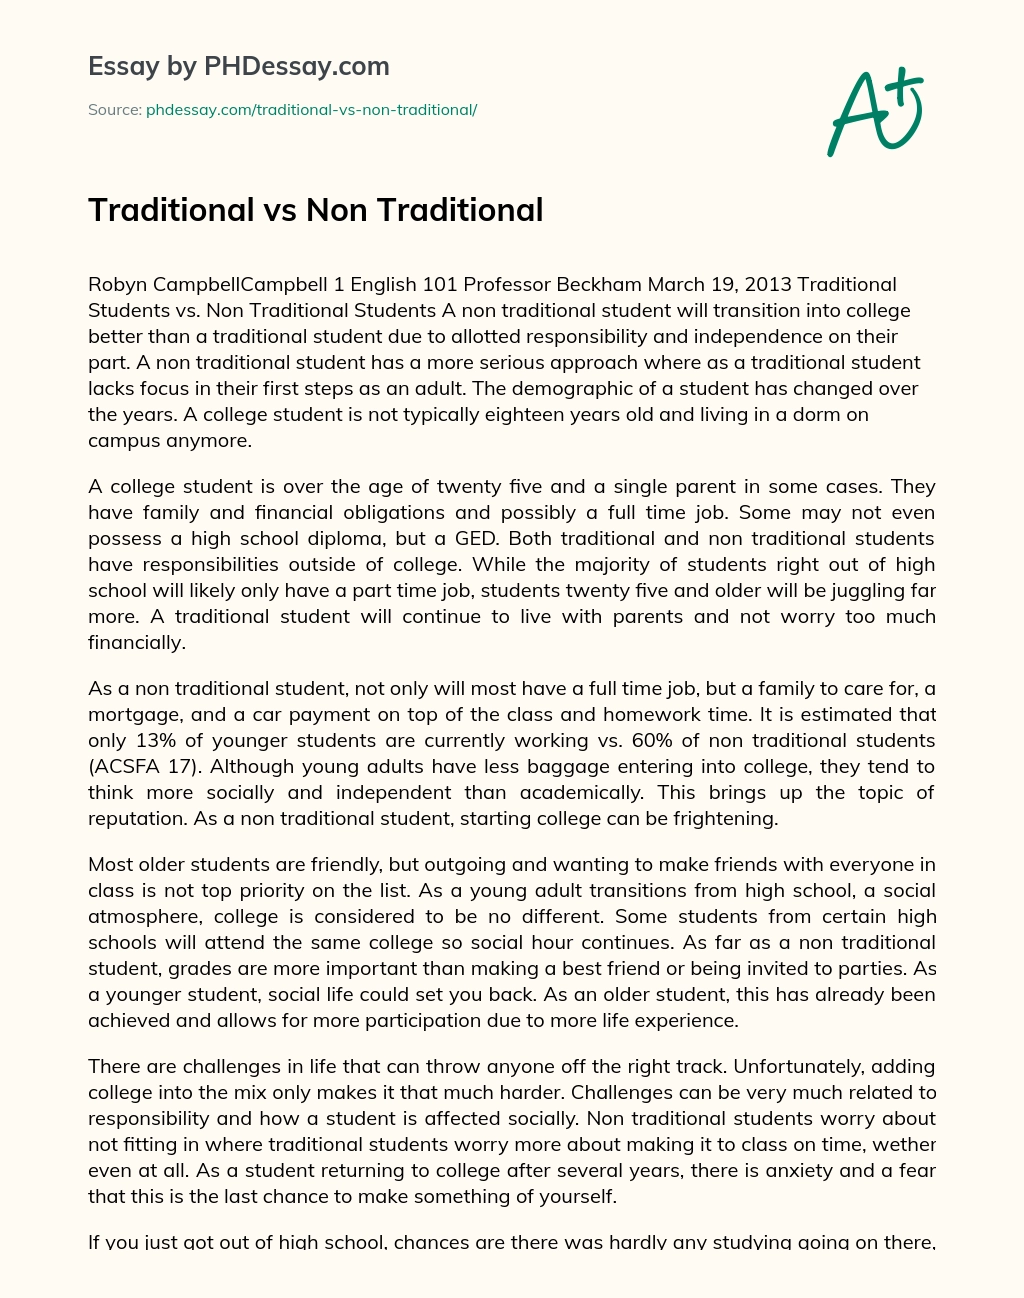 Traditional vs Non Traditional essay